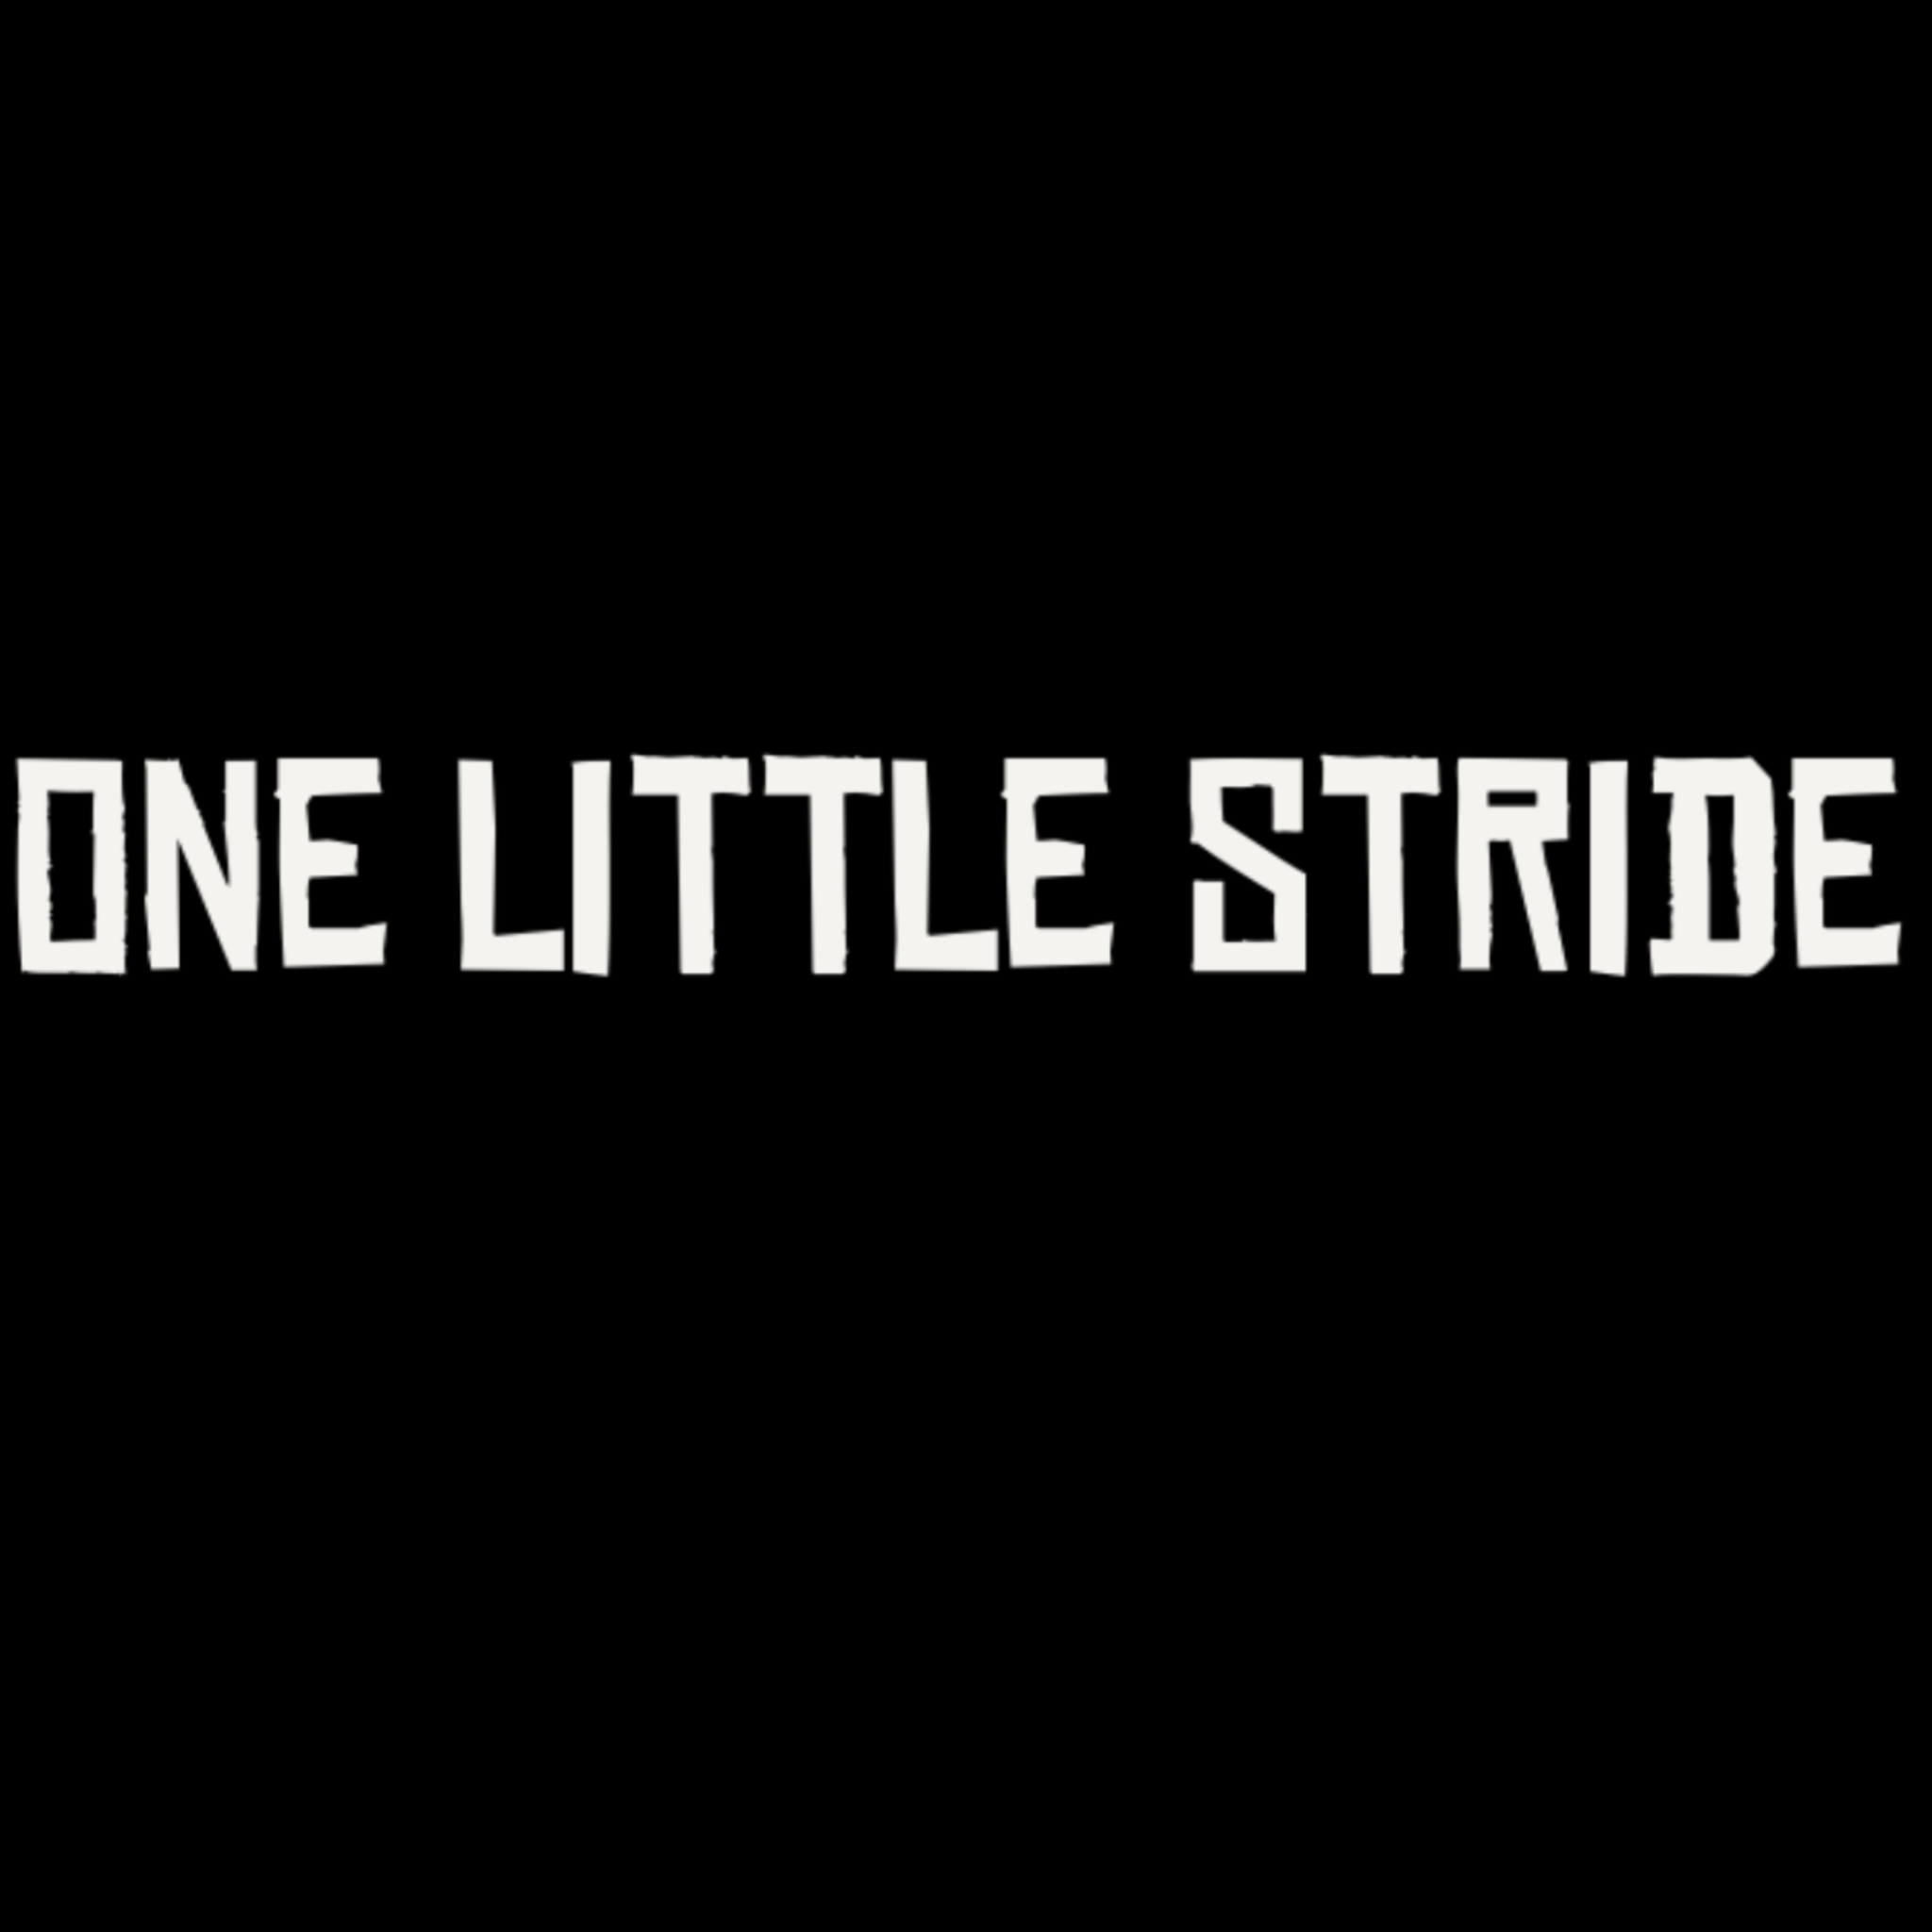 One Little Stride